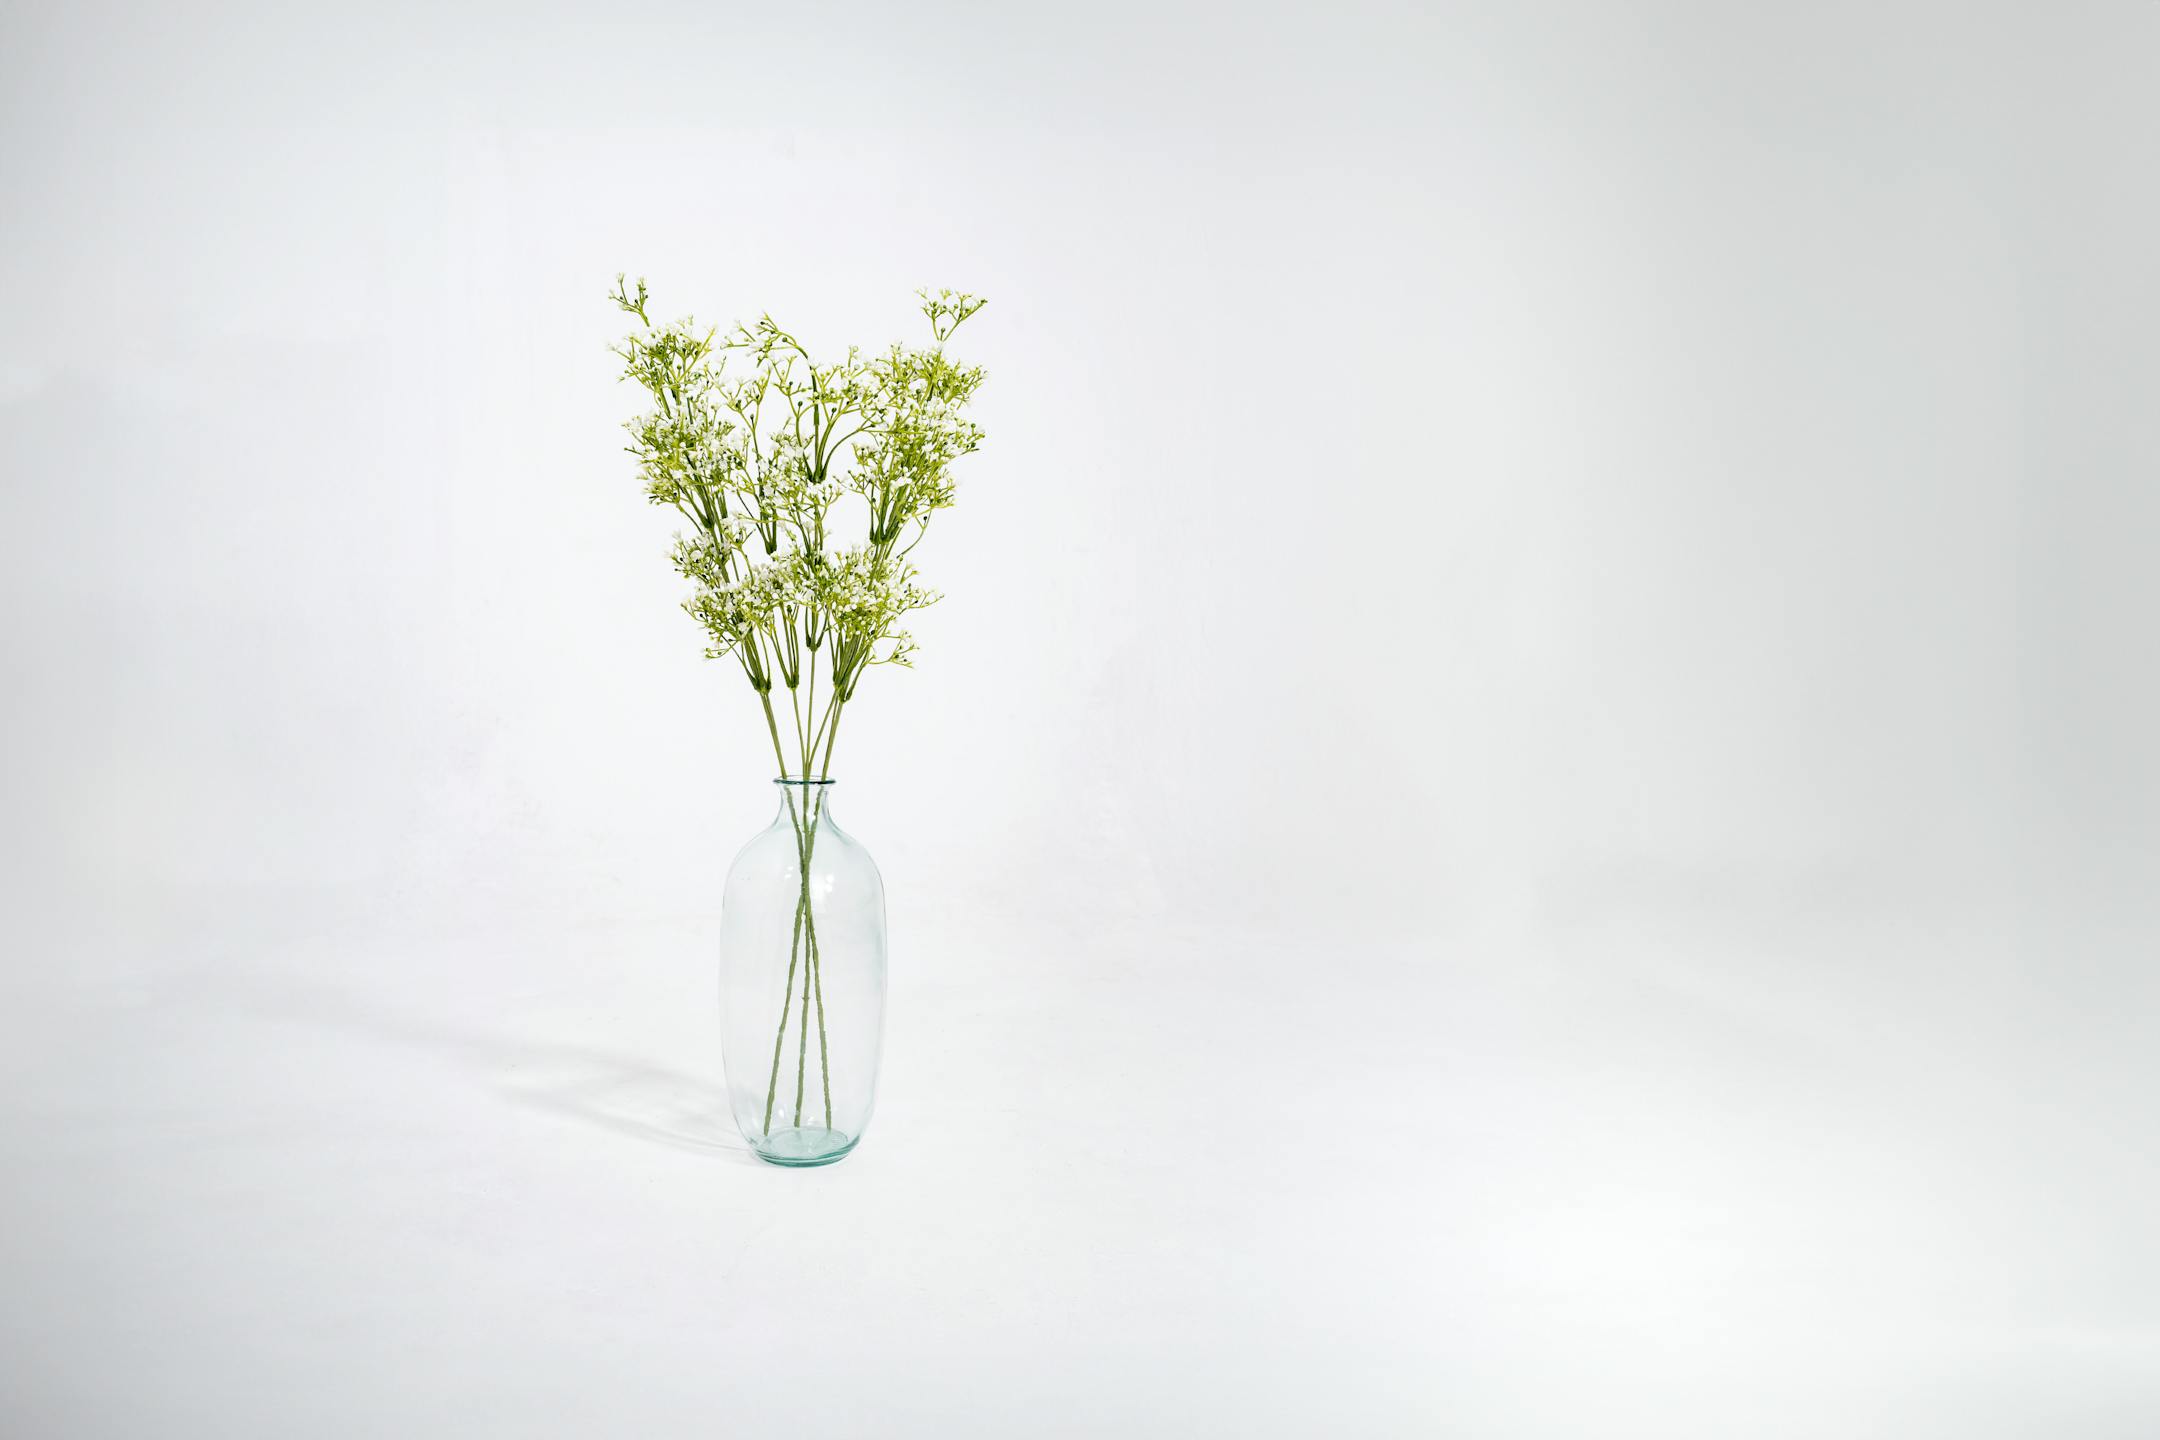 Three artificial white gypsophilia sprays in glass vase